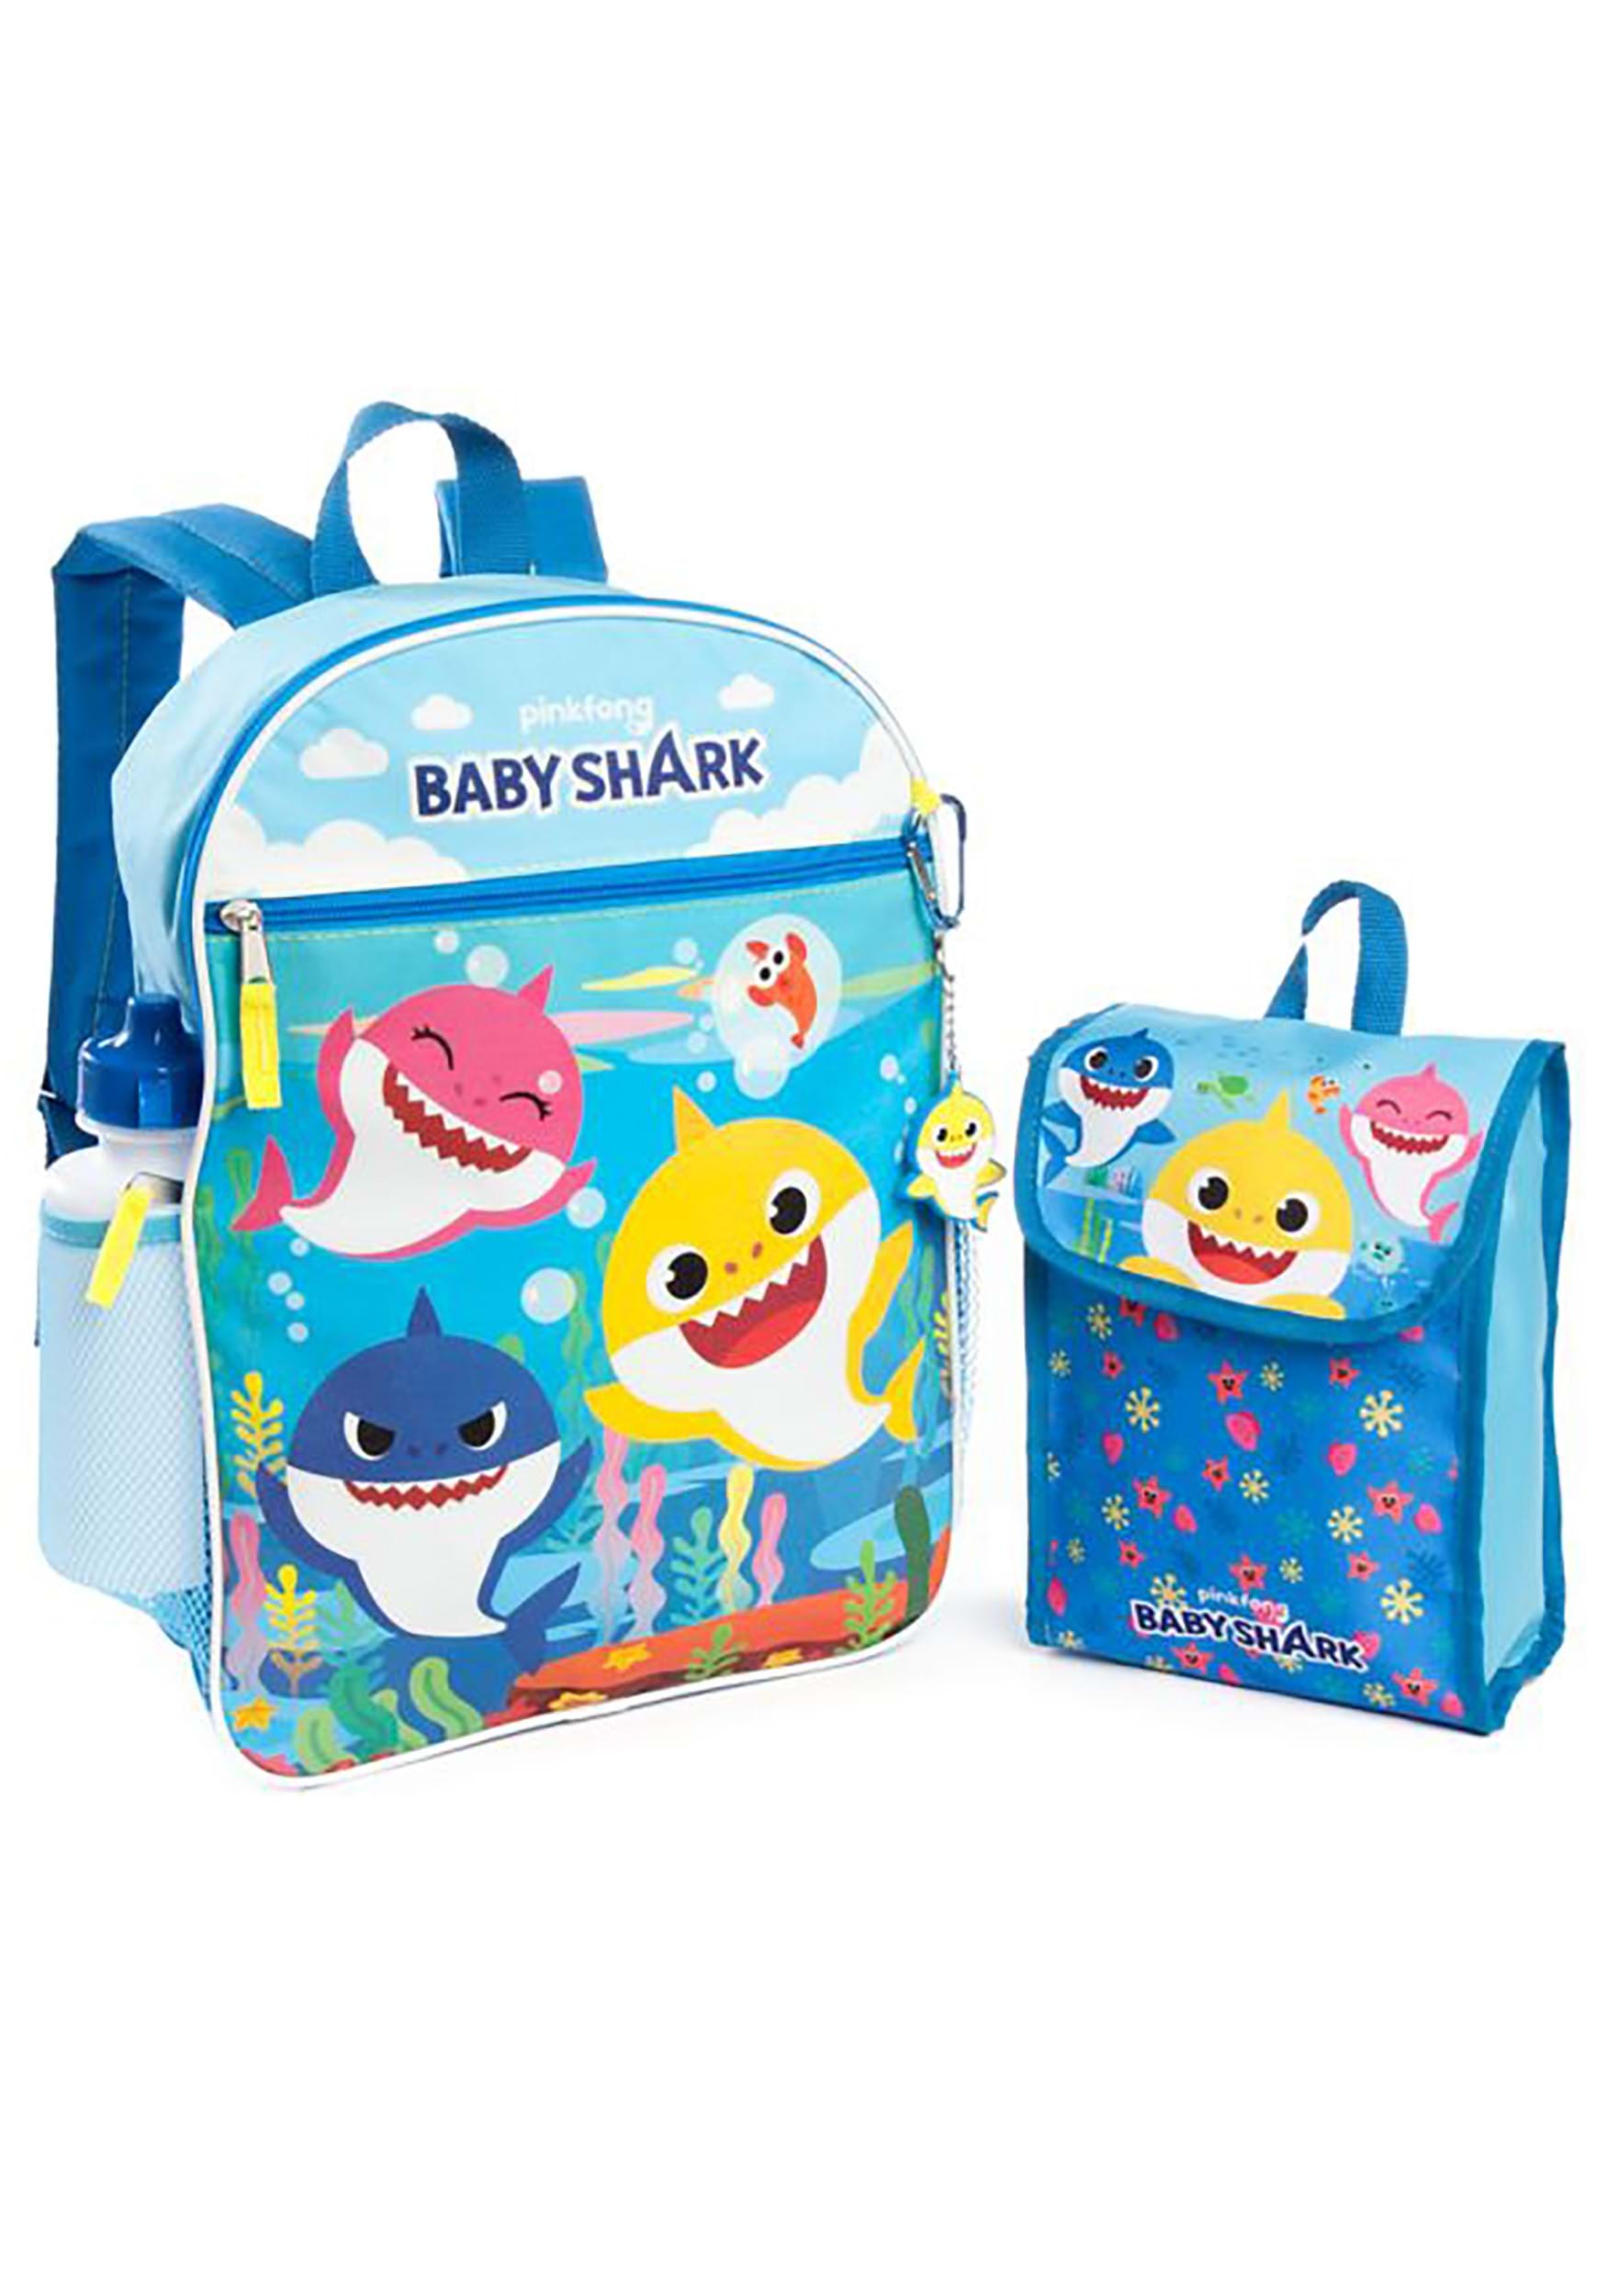 Baby Shark 5 PC Backpack Set for Kids